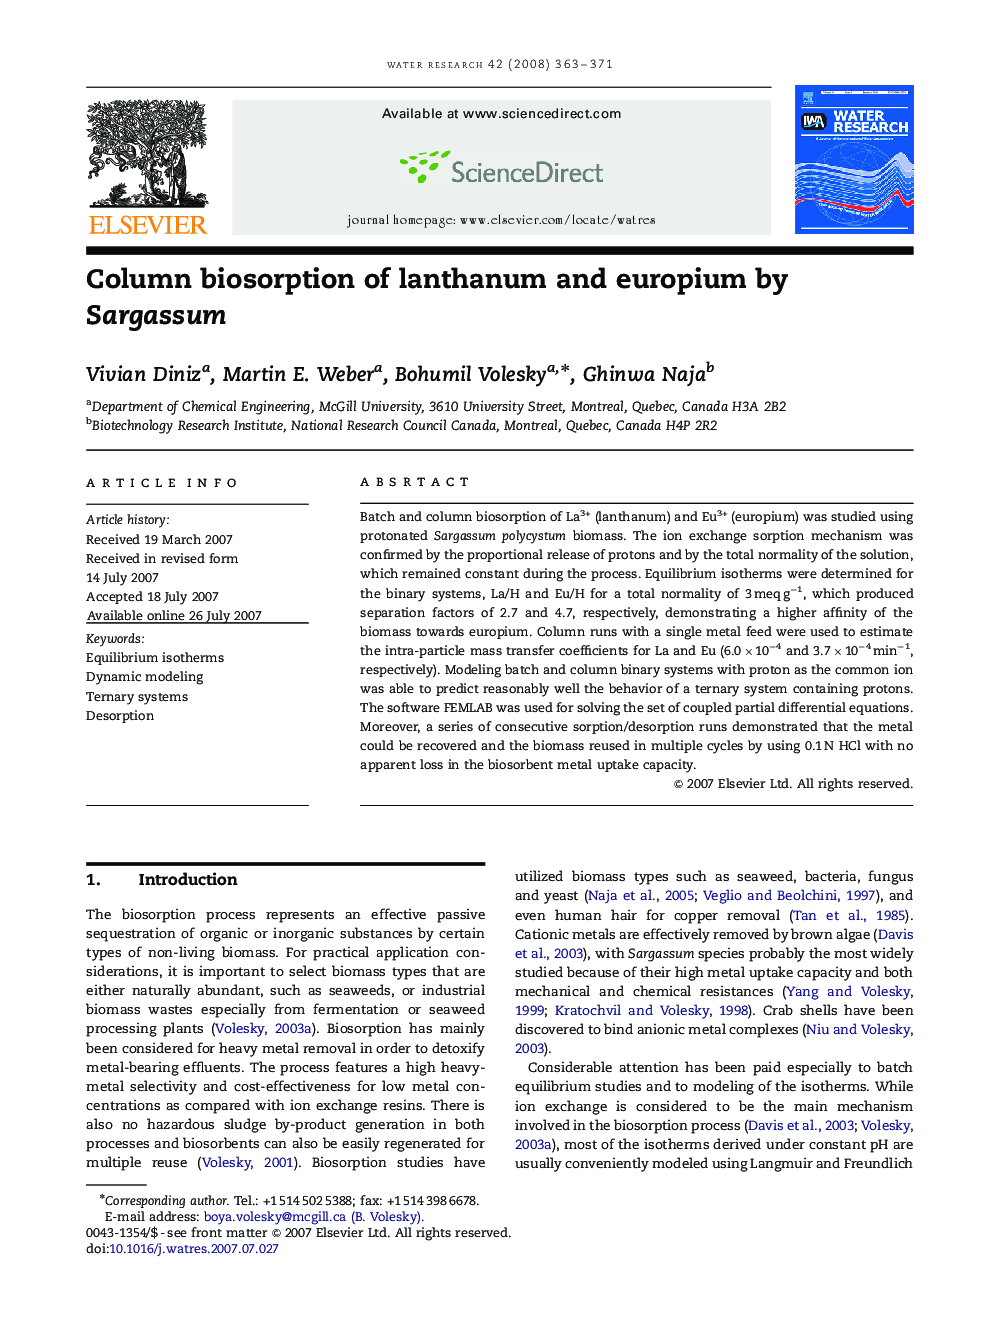 Column biosorption of lanthanum and europium by Sargassum